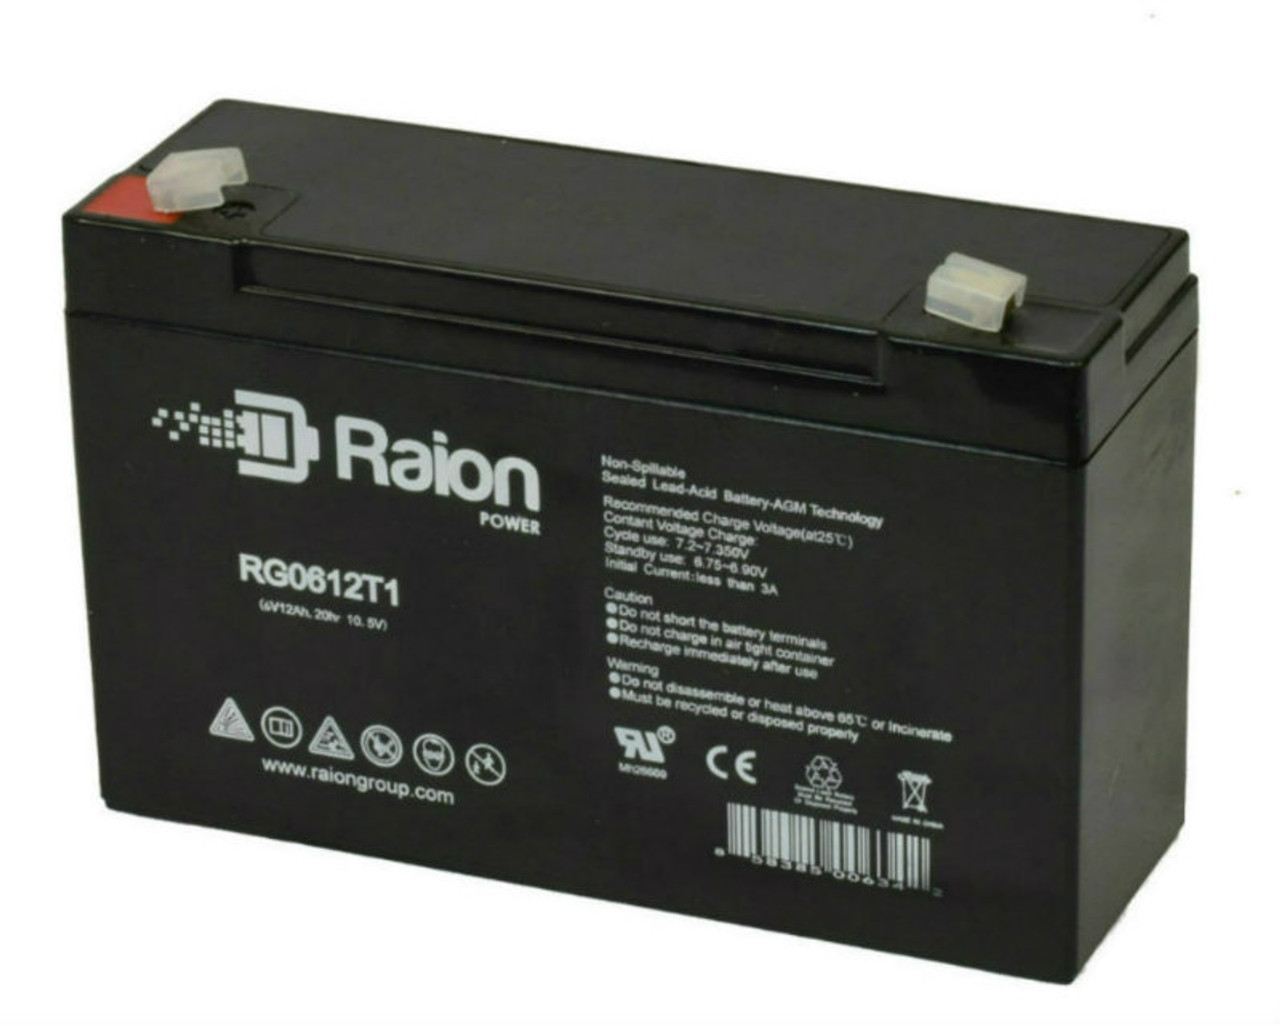 Raion Power RG06120T1 Replacement Emergency Light Battery for Simplex Alarm 20013072 6VOLT